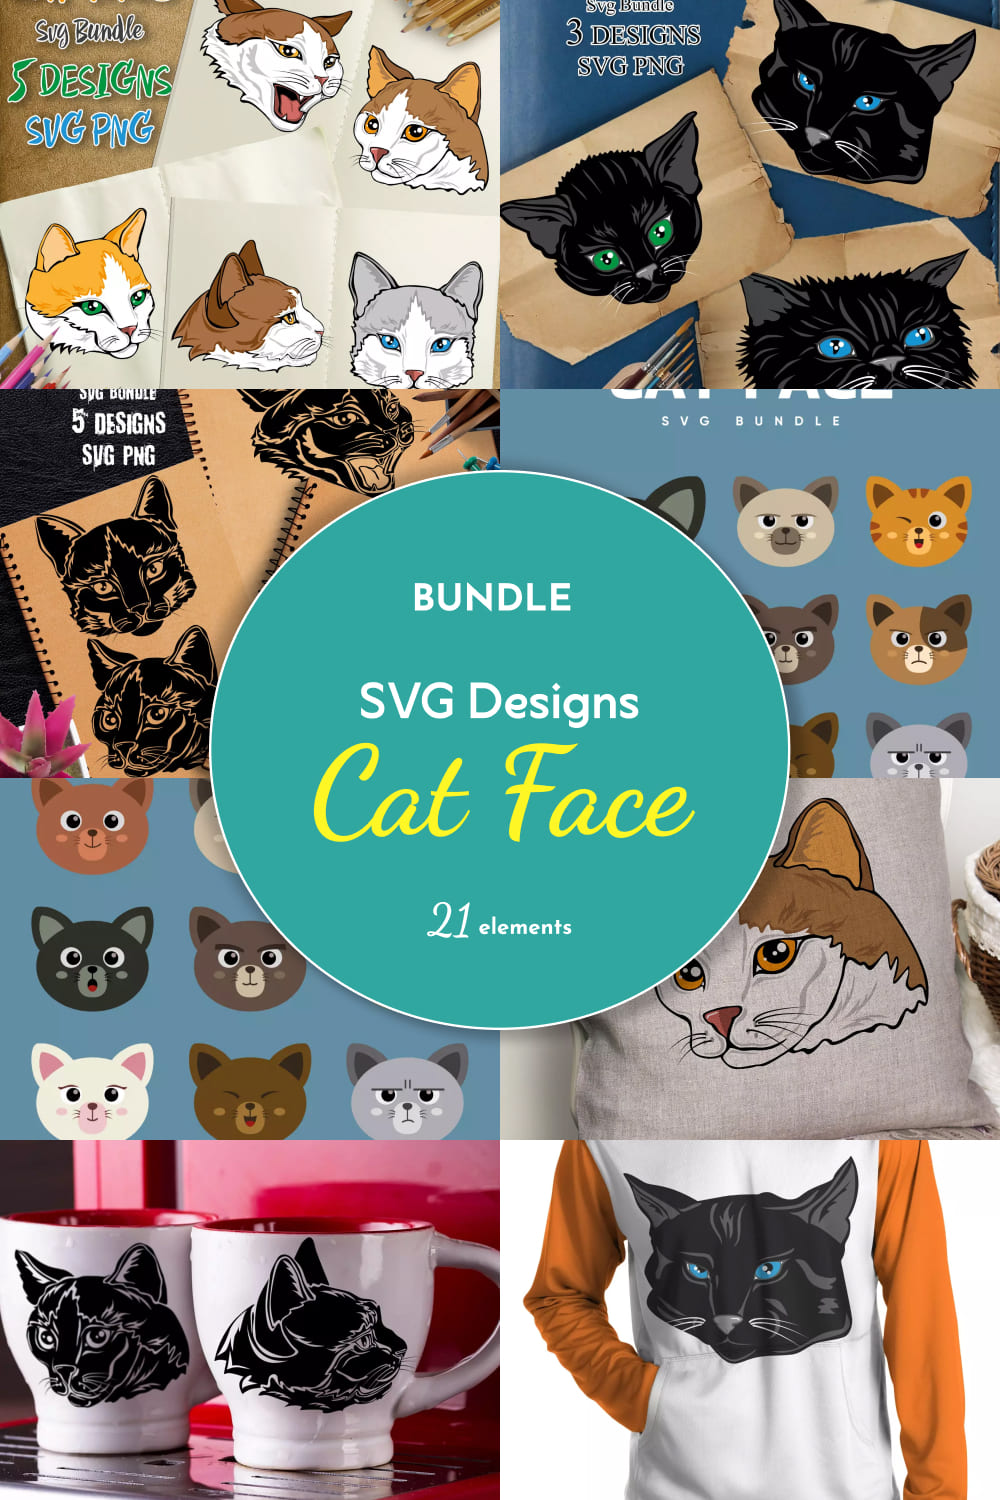 Cat face svg designs bundle images of pinterest.